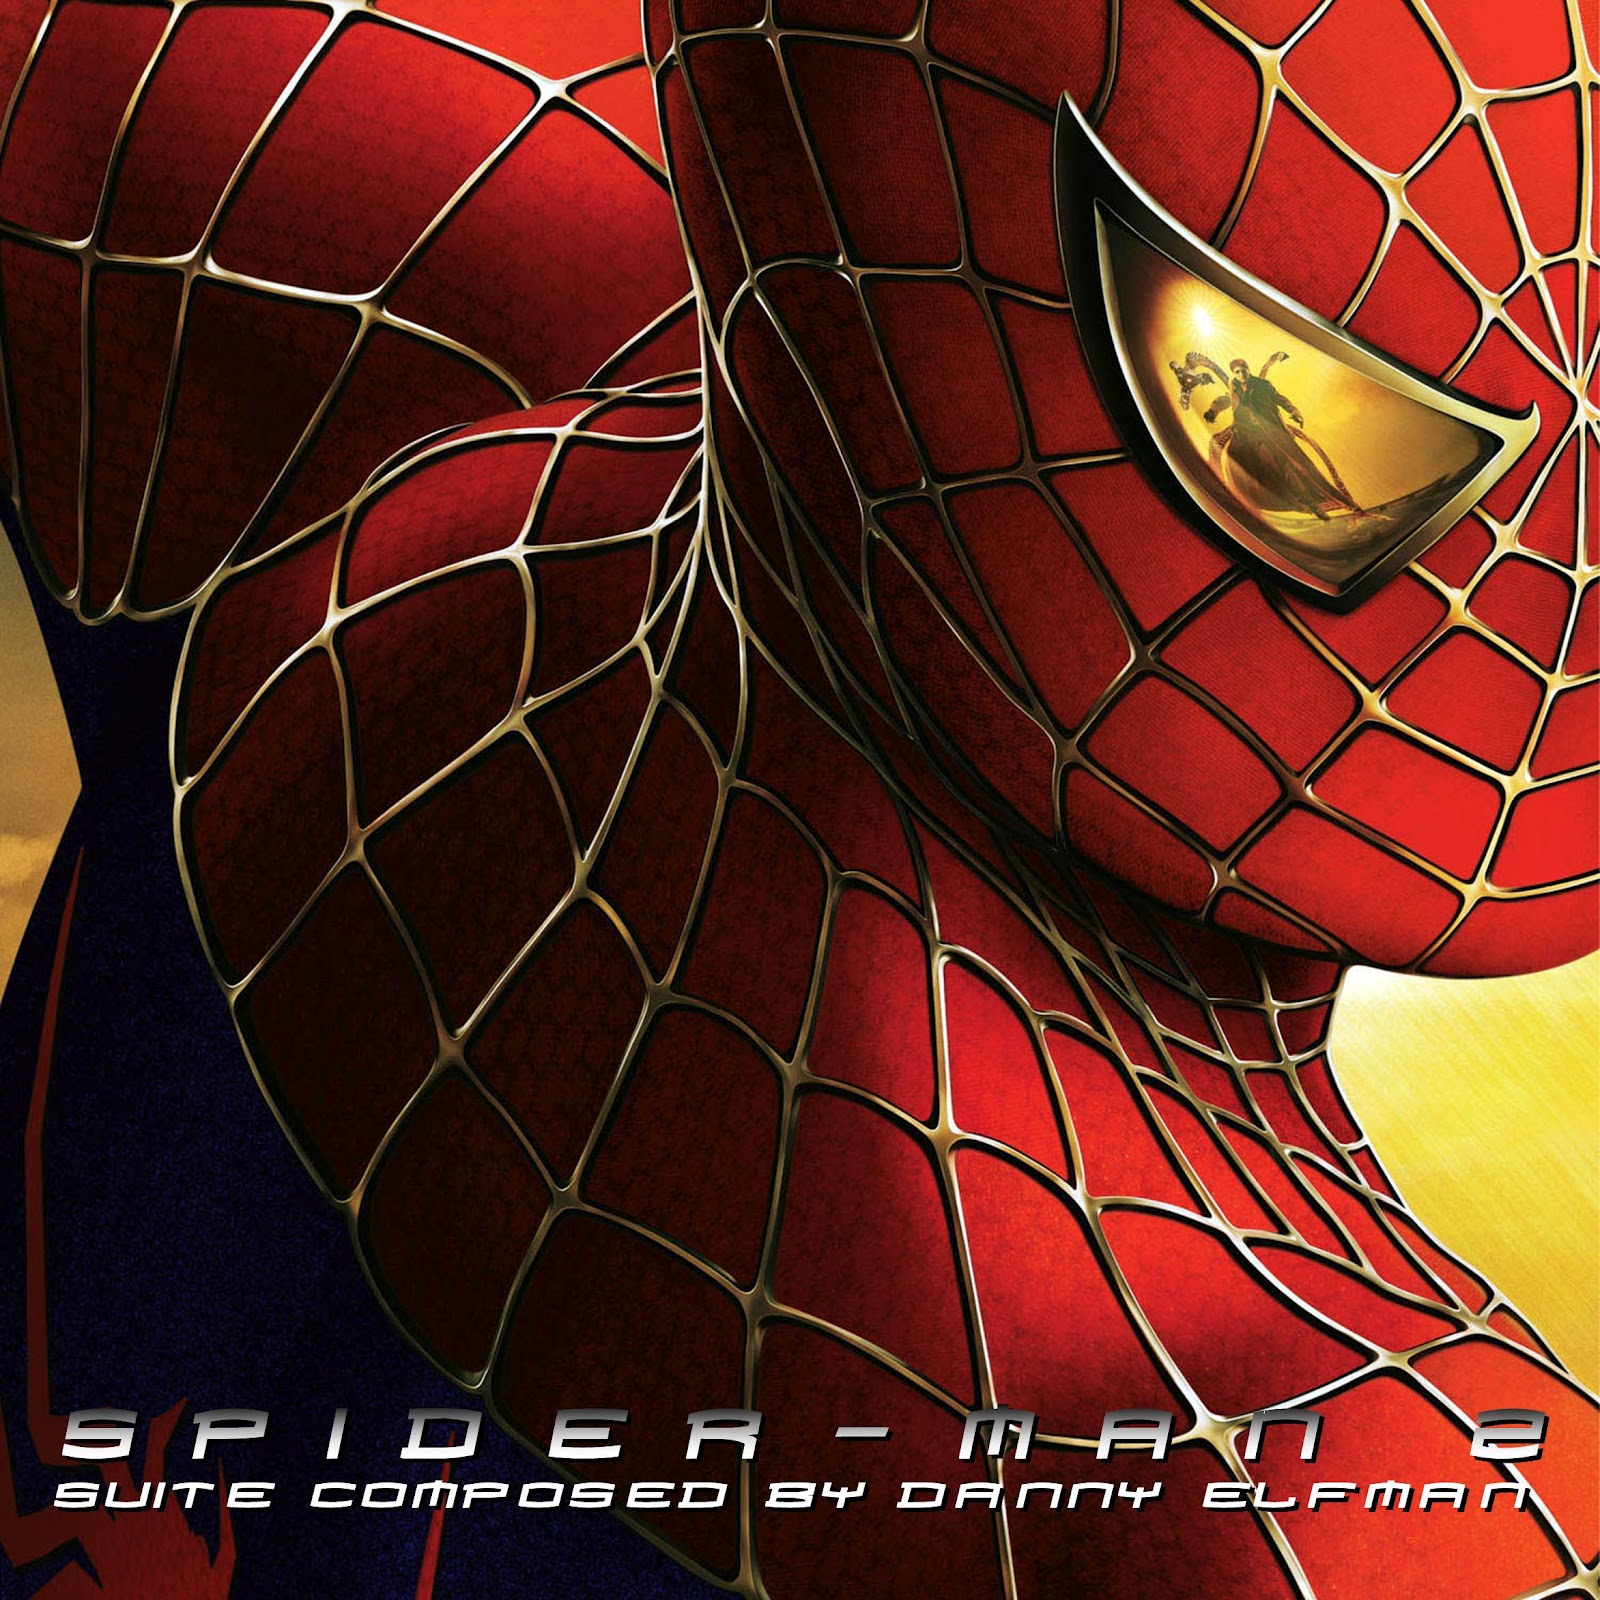 http://4.bp.blogspot.com/-biDkf2bDjKM/UBVaC9mmECI/AAAAAAAADtE/vIgXMa5jNzw/s1600/Spider-Man+2.jpg